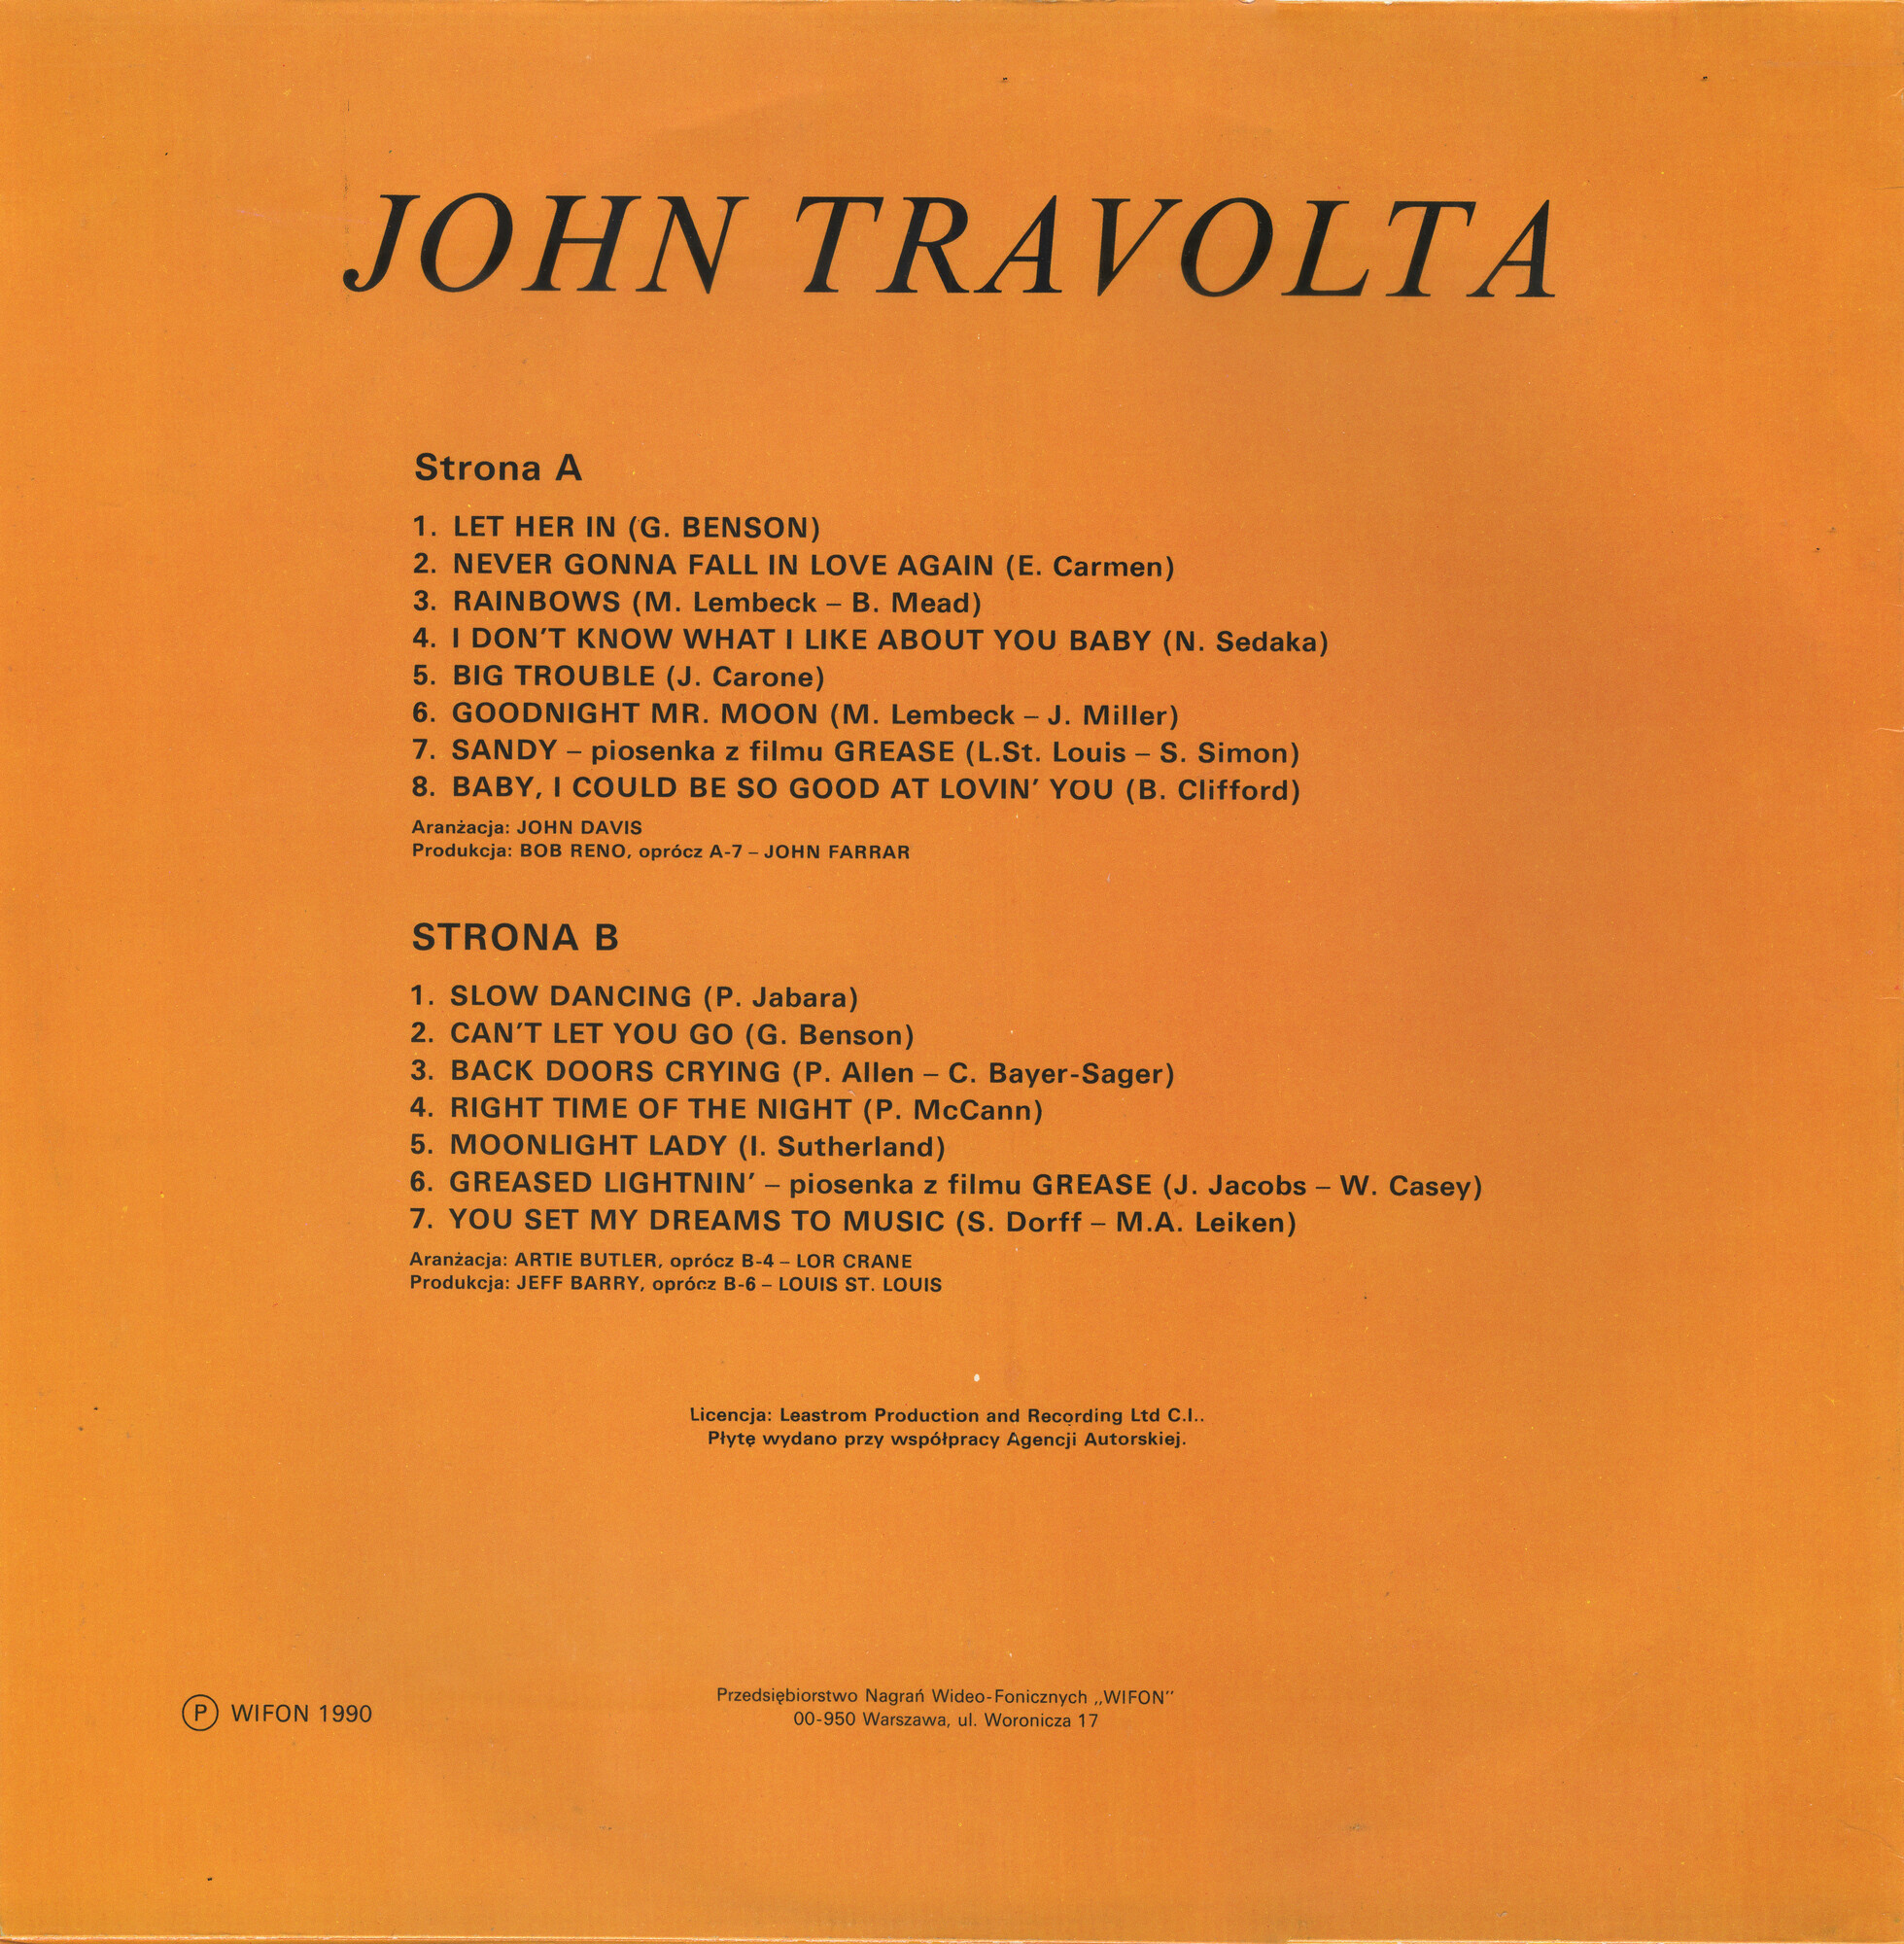 John Travolta - Złote przeboje [по заказу польской фирмы WIFON, LP 169]